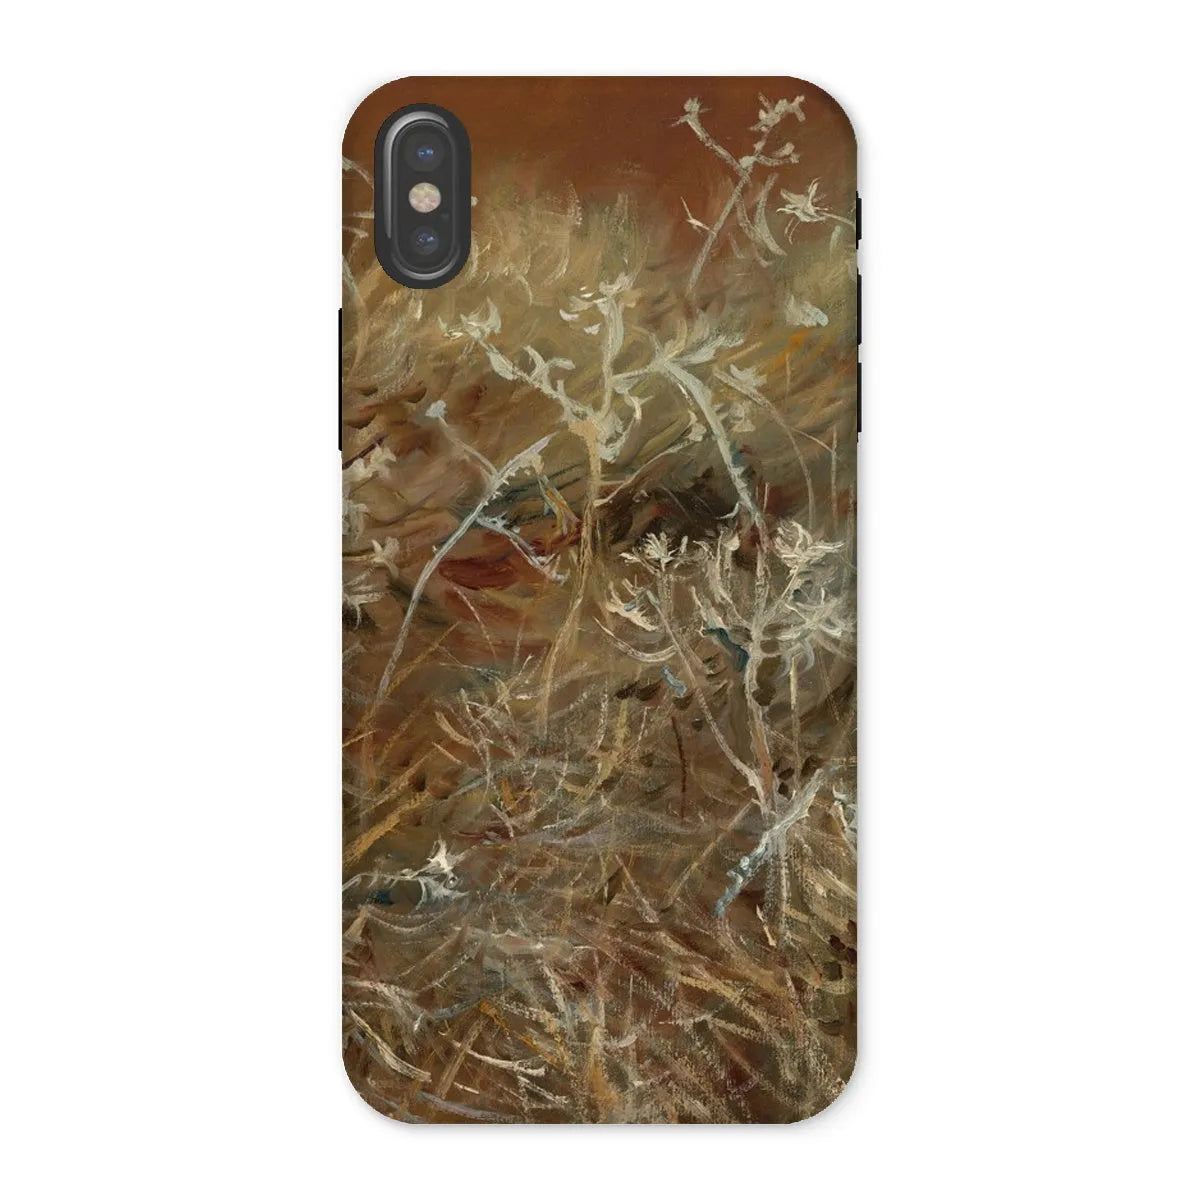 Thistles - Impressionism Art Phone Case - John Singer Sargent - Iphone x / Matte - Mobile Phone Cases - Aesthetic Art